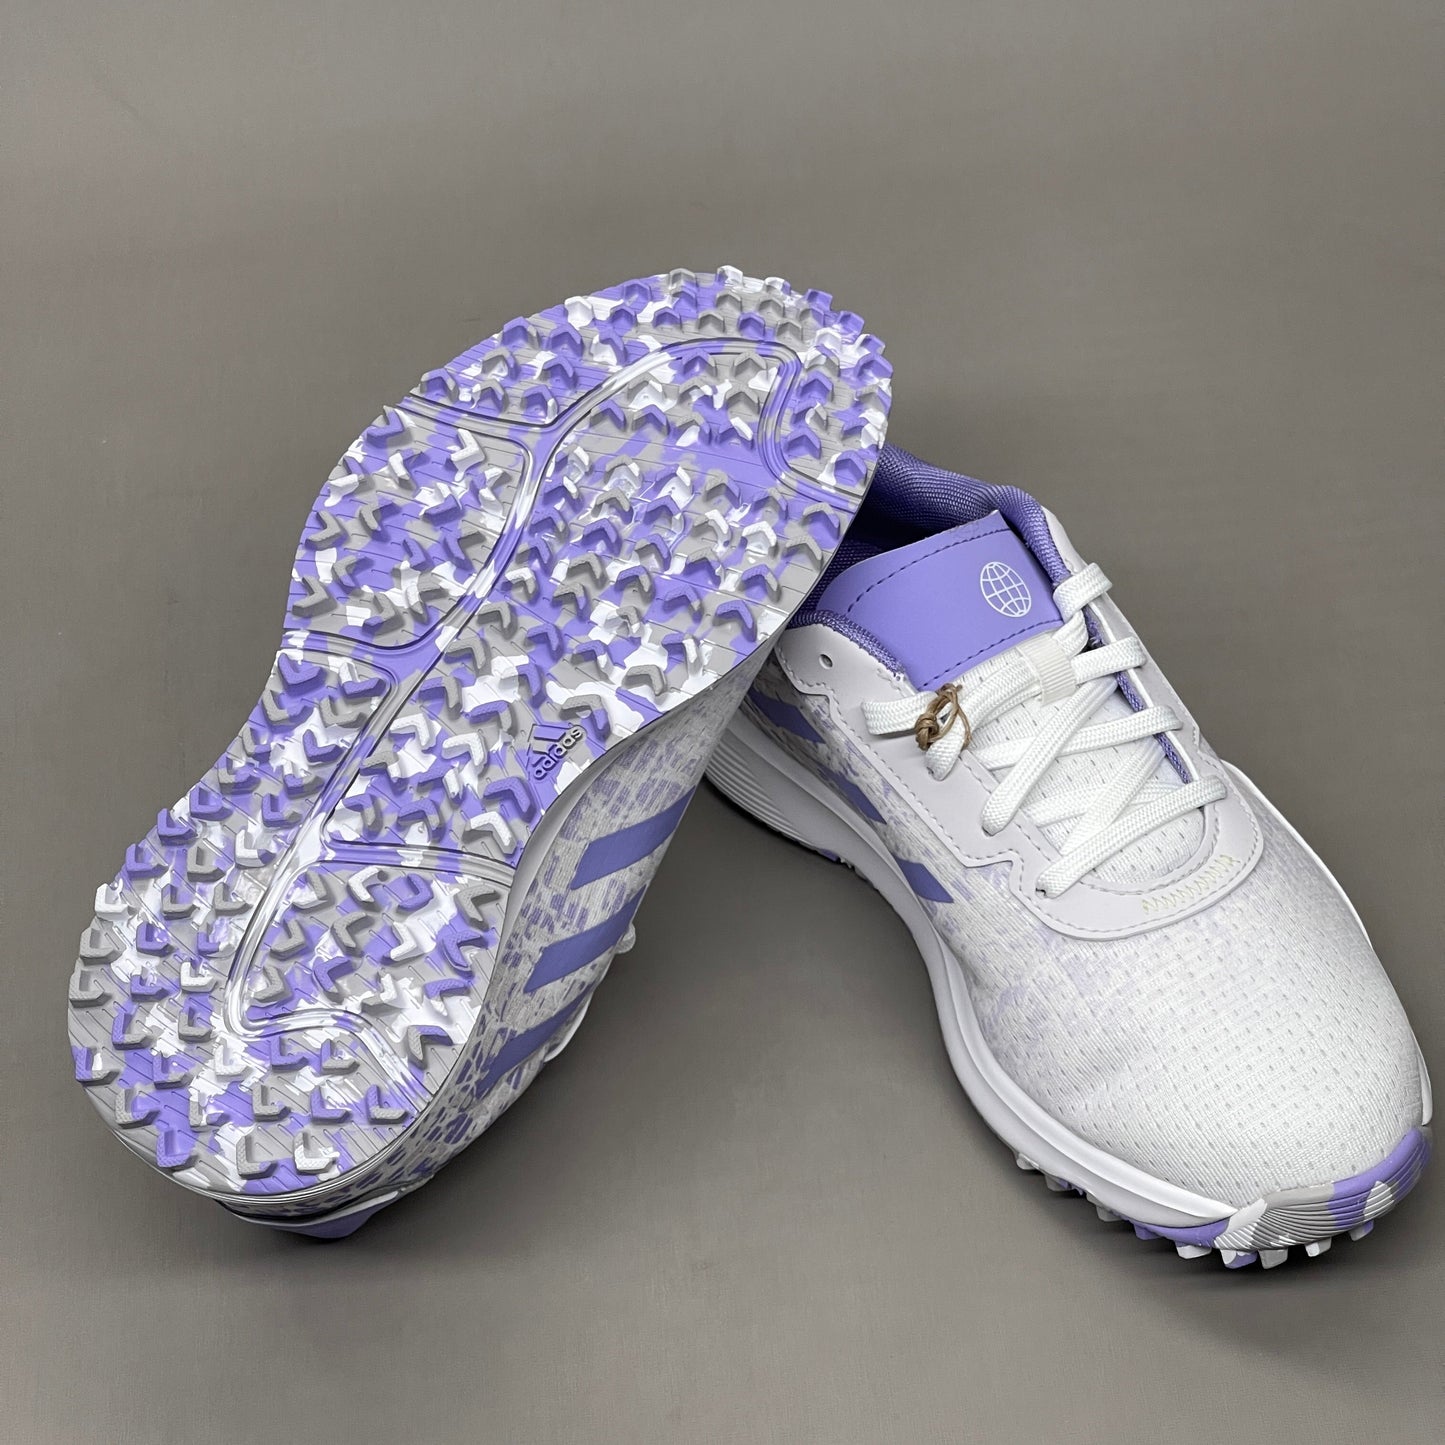 ADIDAS Golf Shoes JR S2G SL Waterproof Youth Sz 5 White / Lime / Purple GV9787 (New)